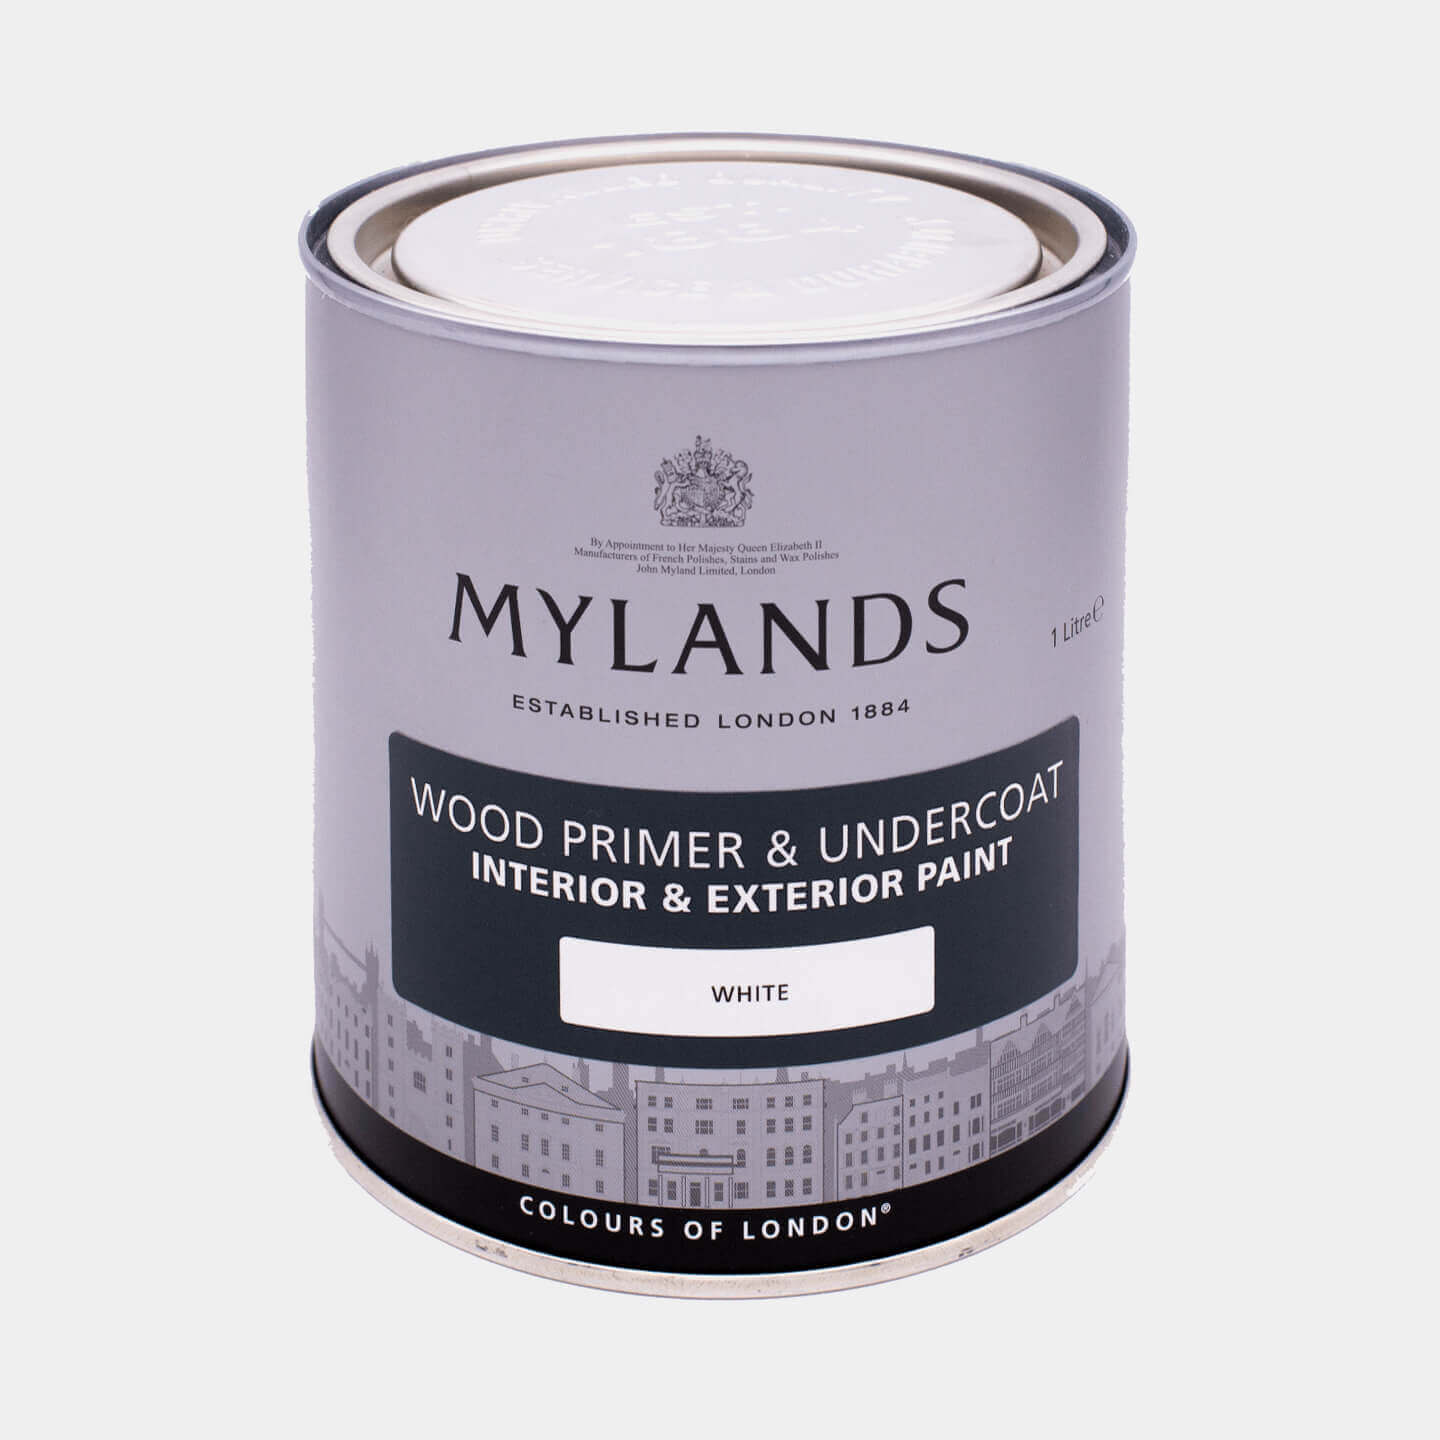 Mylands Wood Primer & Undercoat - Light Grey, 5L